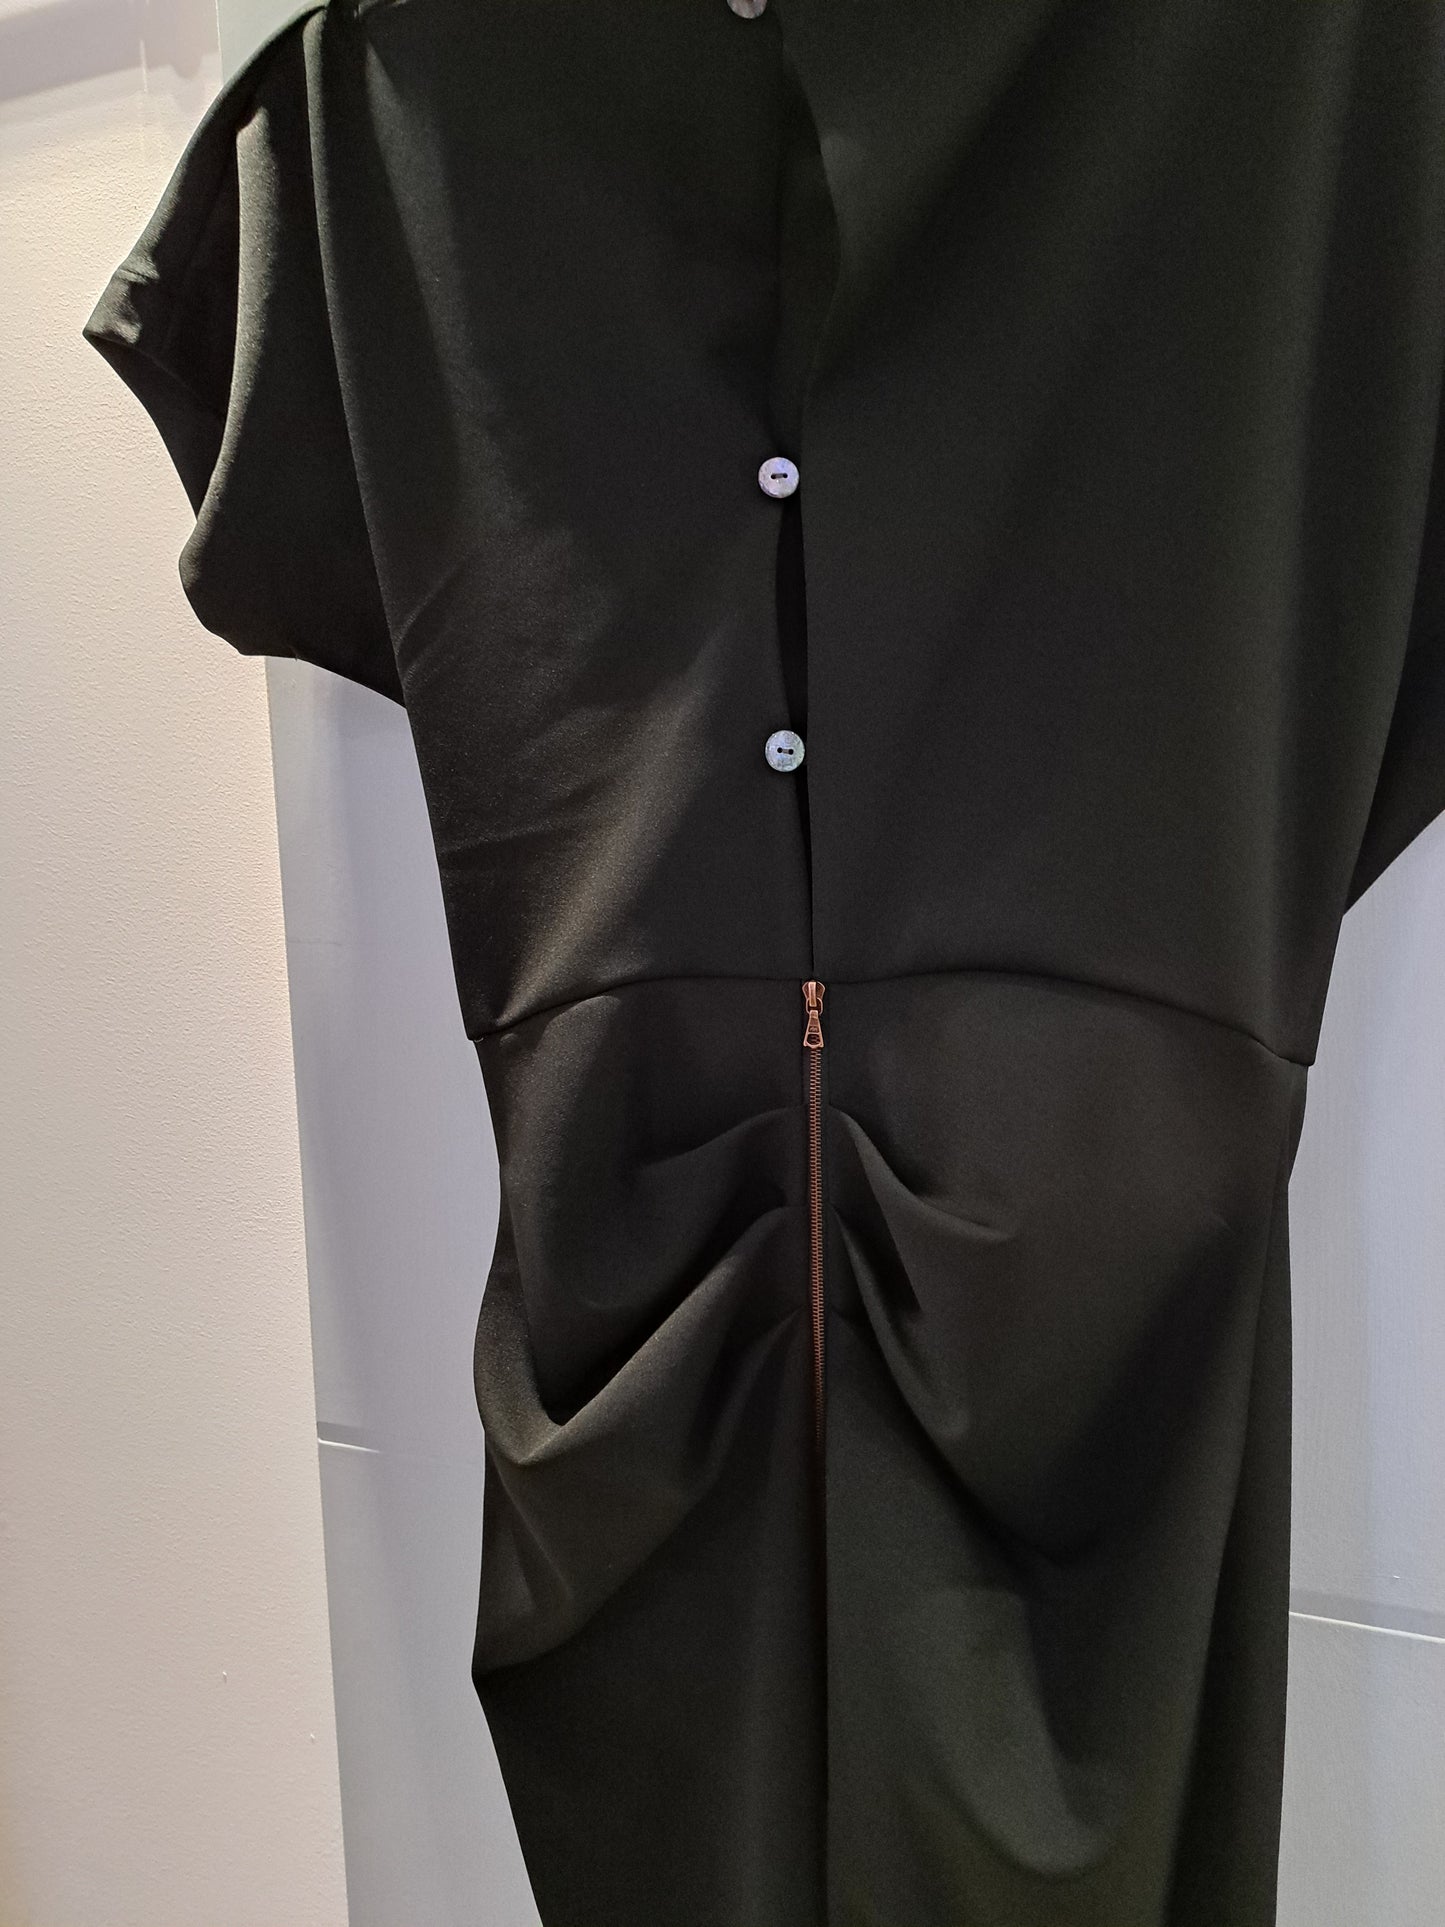 Kevan Jon Poppy tie dress BLACK - Maya Maya Ltd